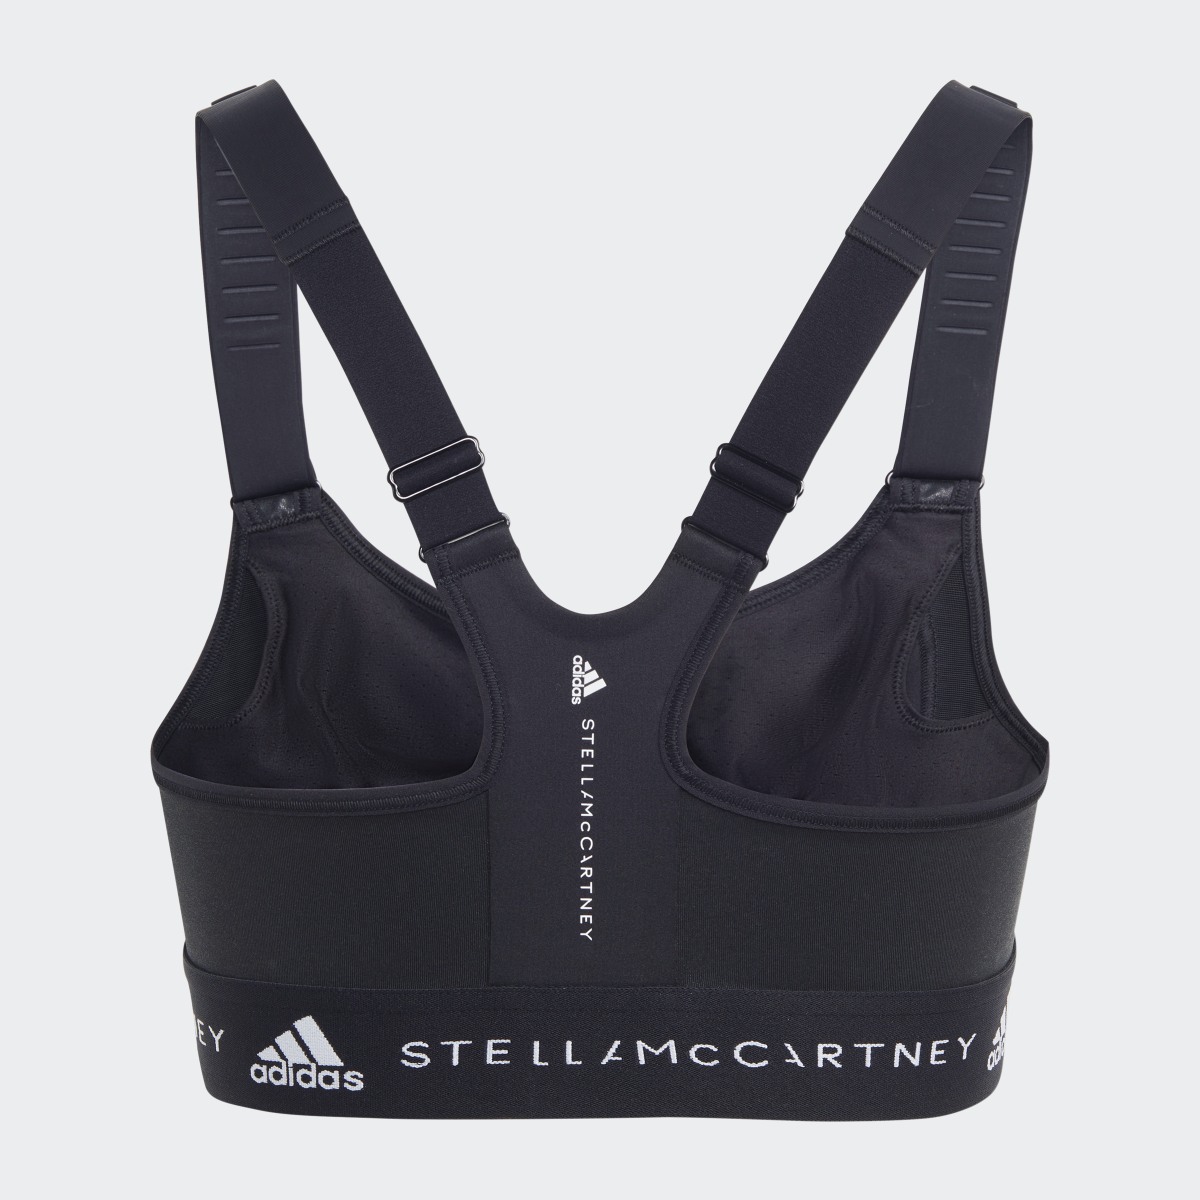 Adidas Sutiã de Desporto Sustentação Elevada Pós-mastectomia TrueStrength adidas by Stella McCartney. 7